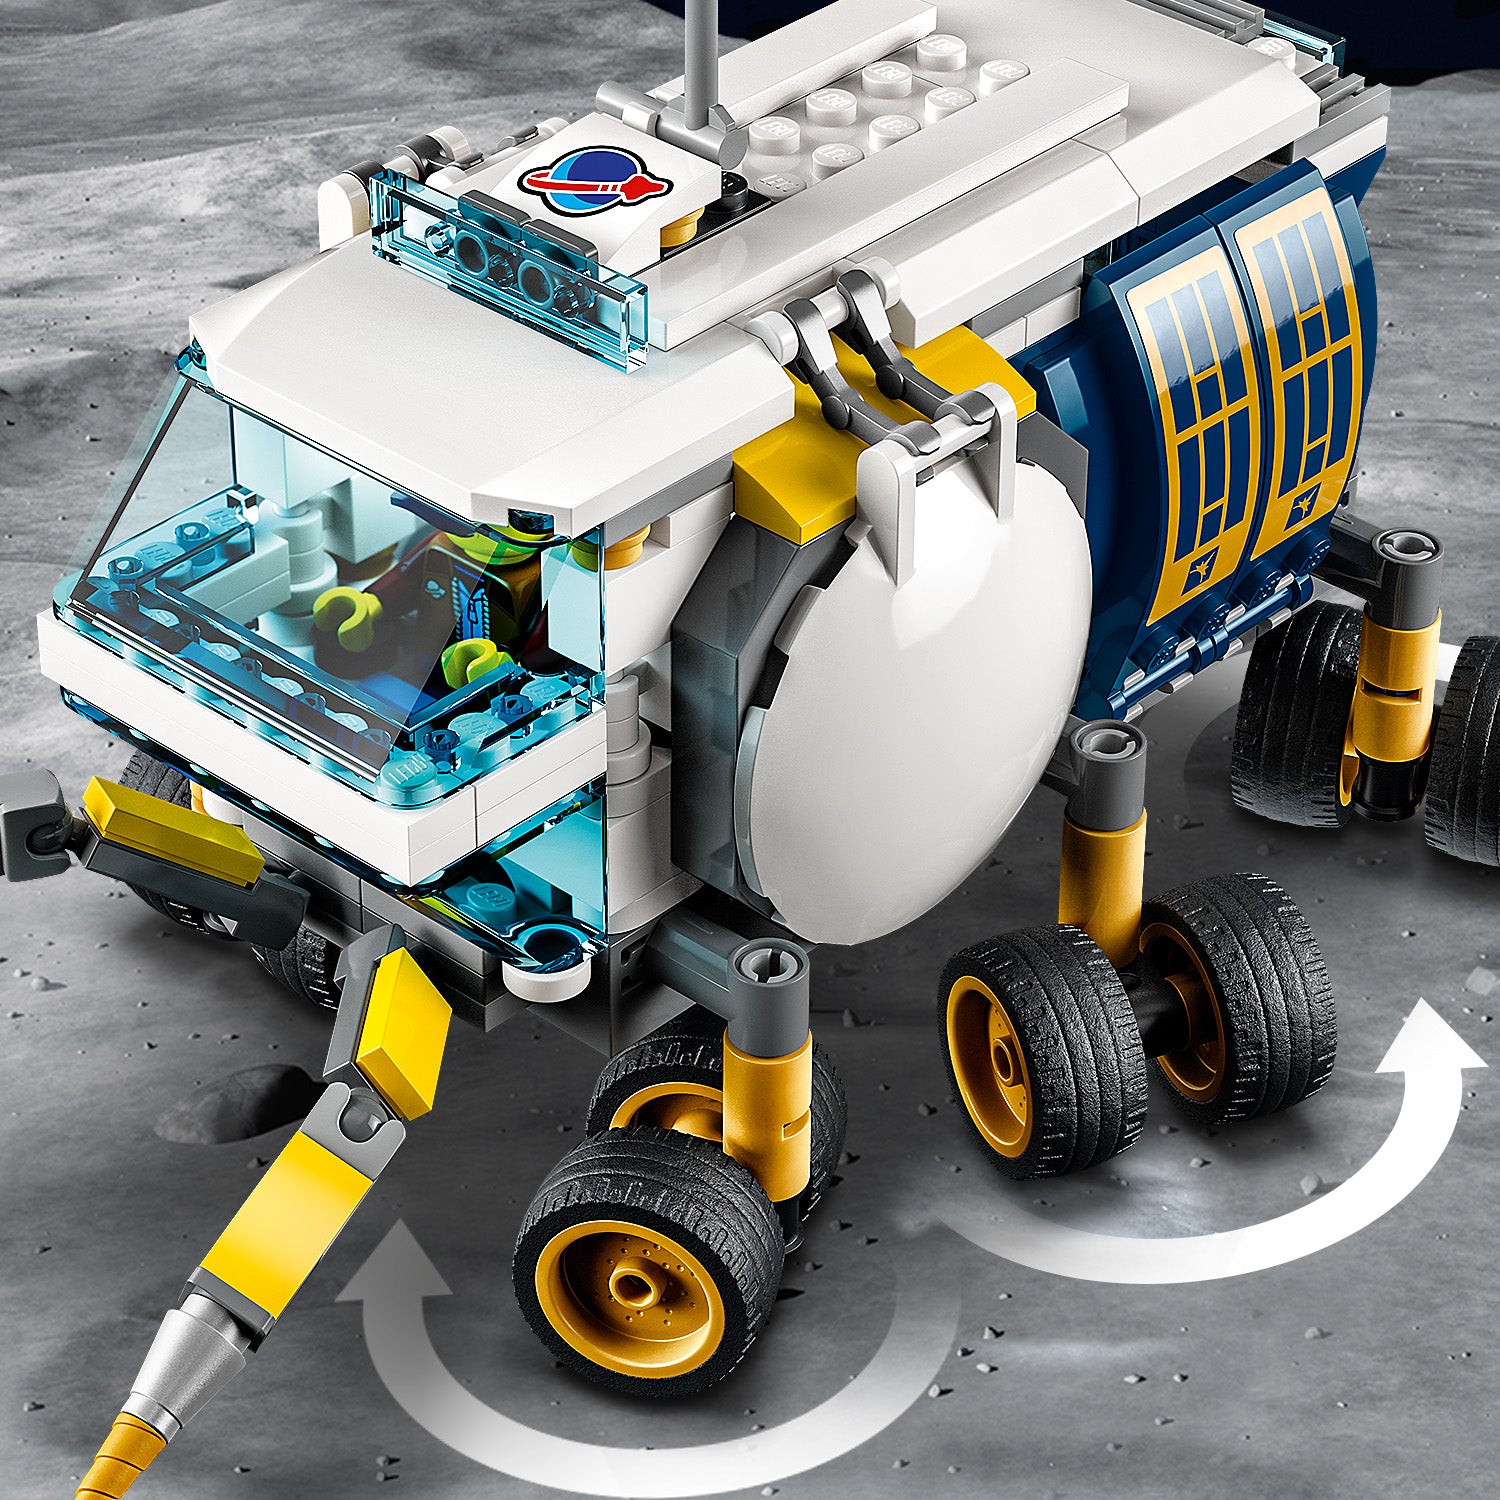 Lego 60348 Lunar Roving Vehicle